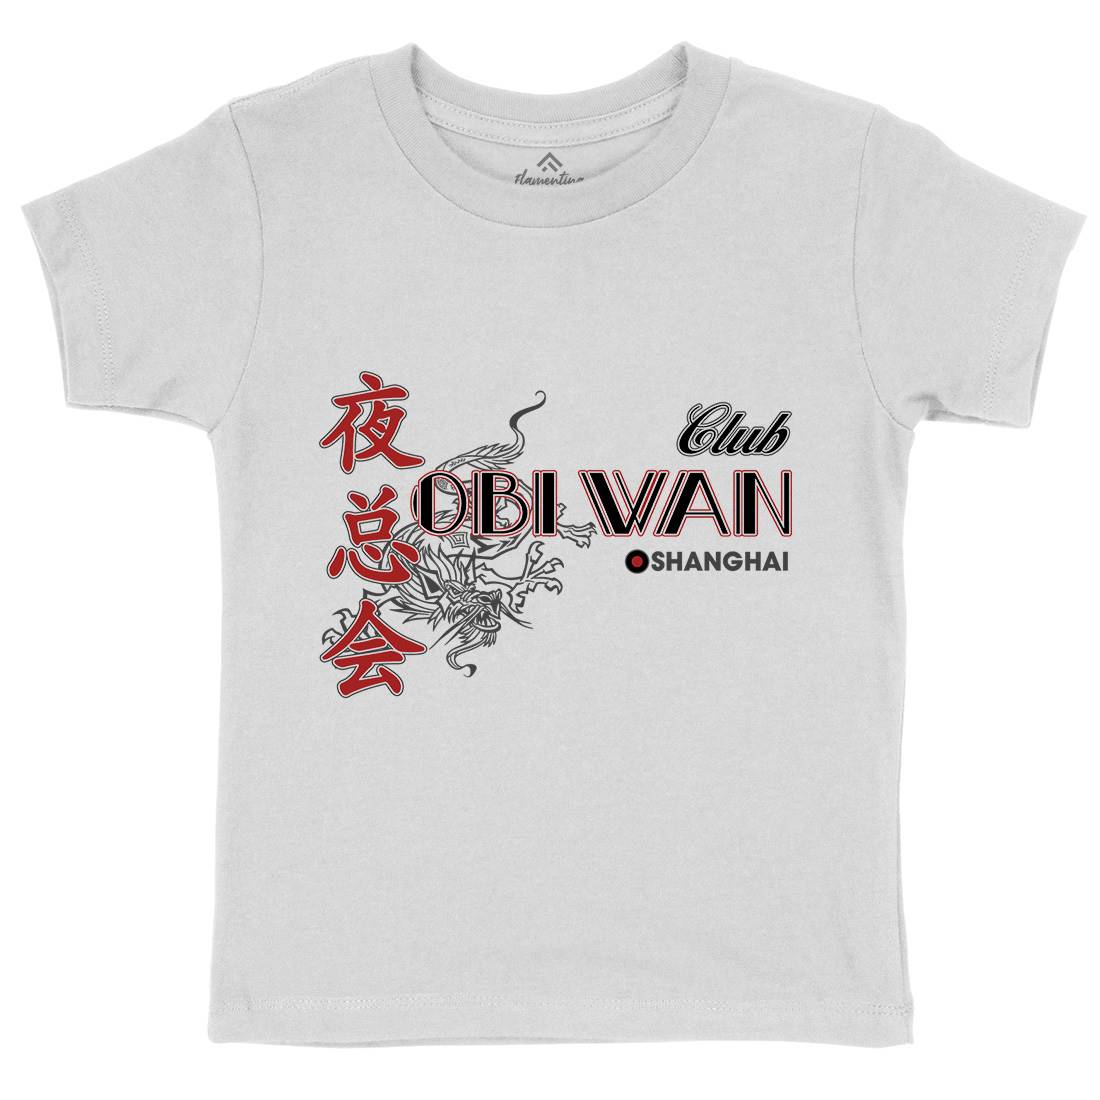 Club Obi Wan Kids Crew Neck T-Shirt Retro D385